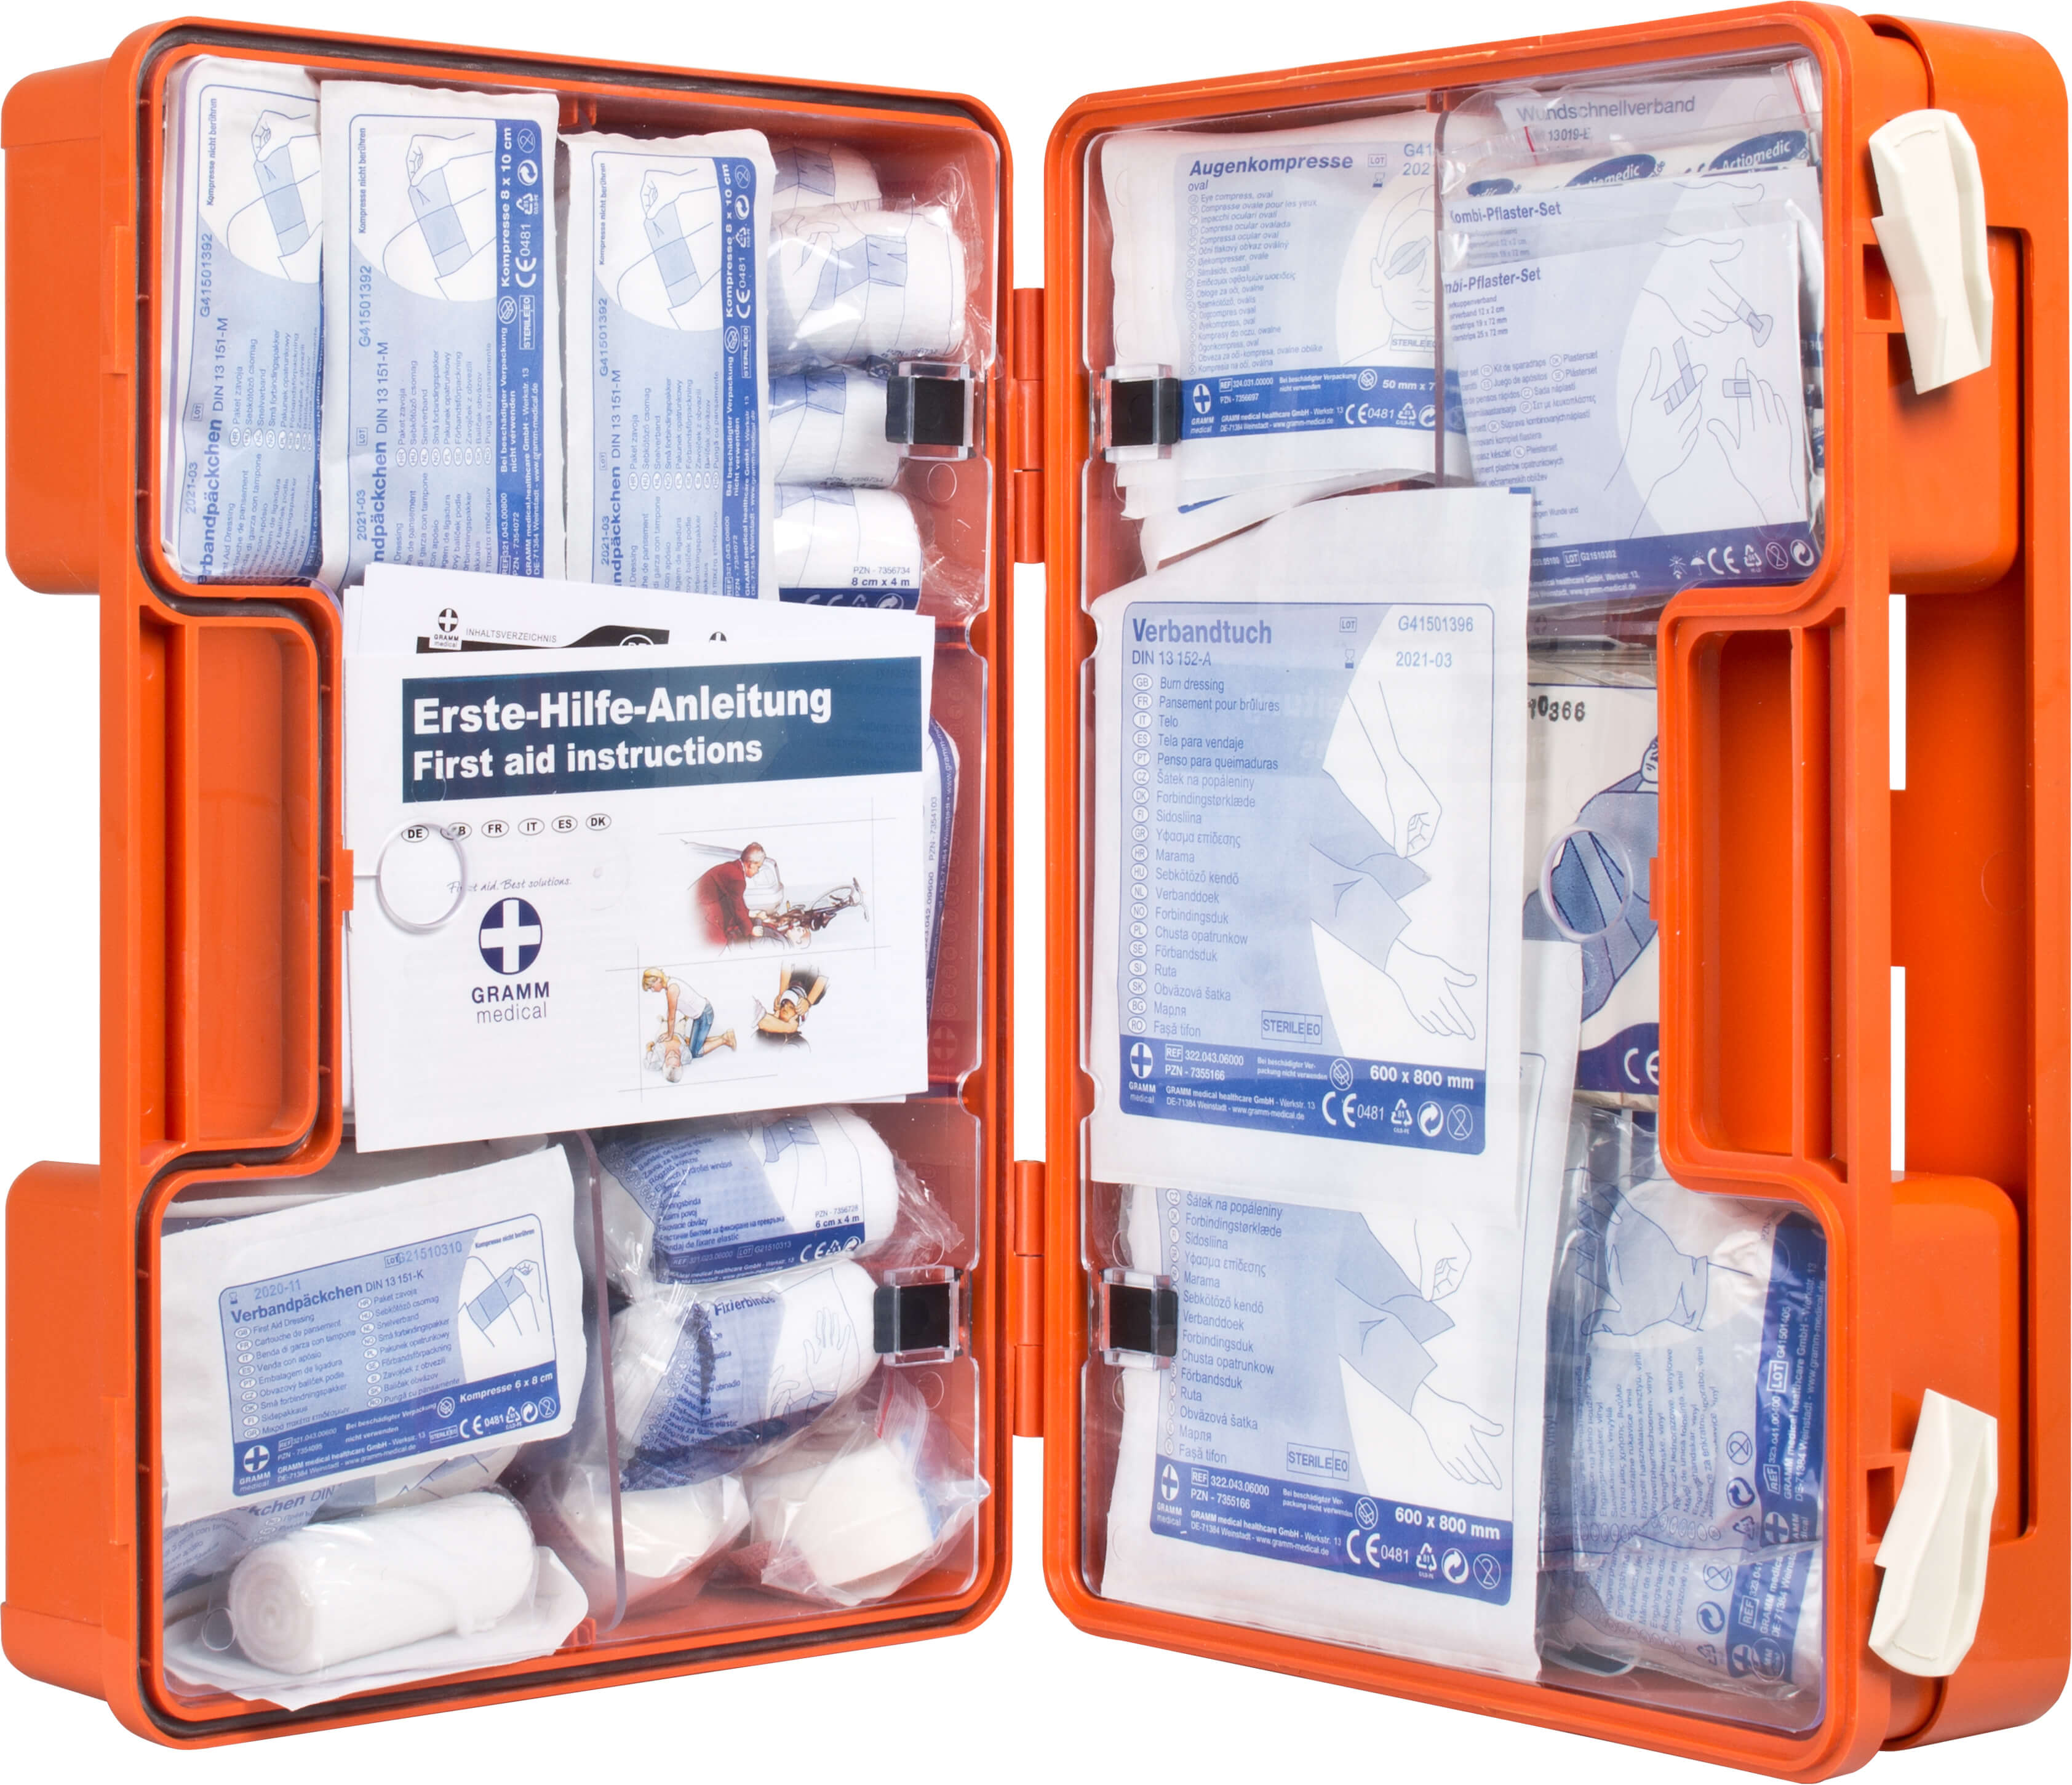 First Aid Kit Maxi DIN13169 - Actiomedic